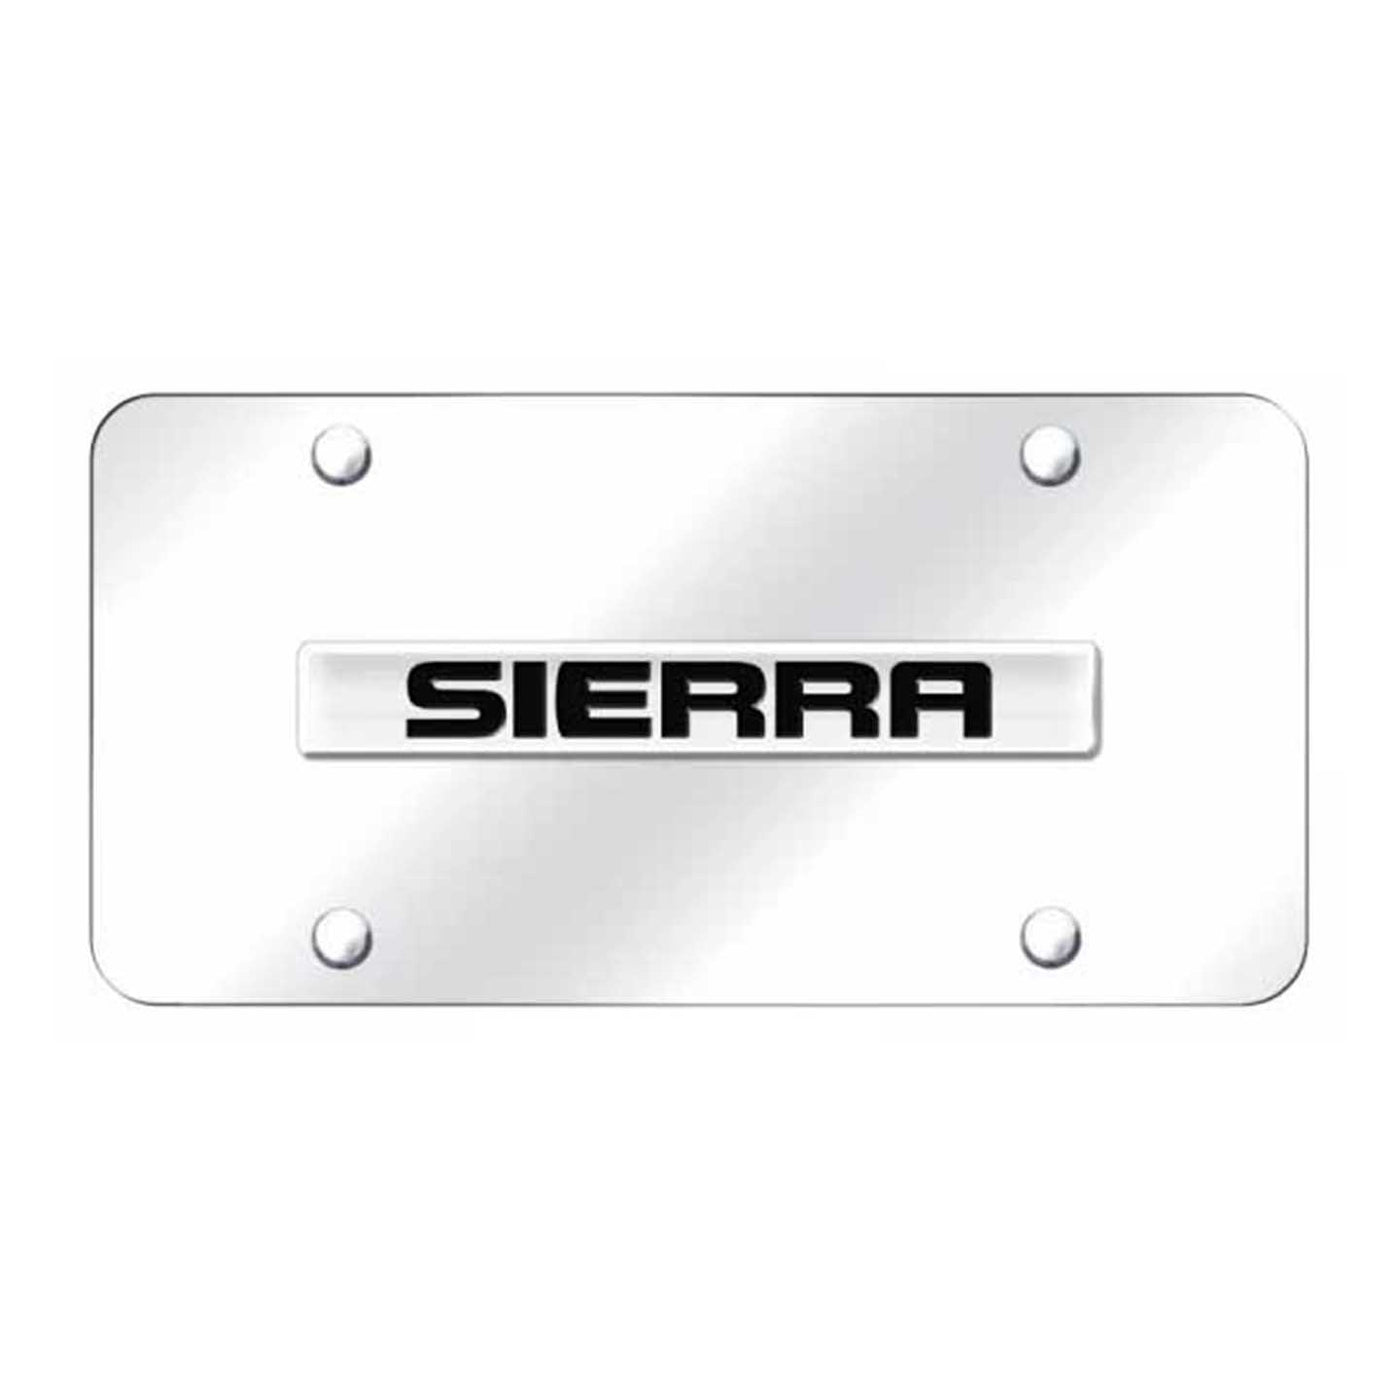 Sierra Name License Plate - Chrome on Mirrored